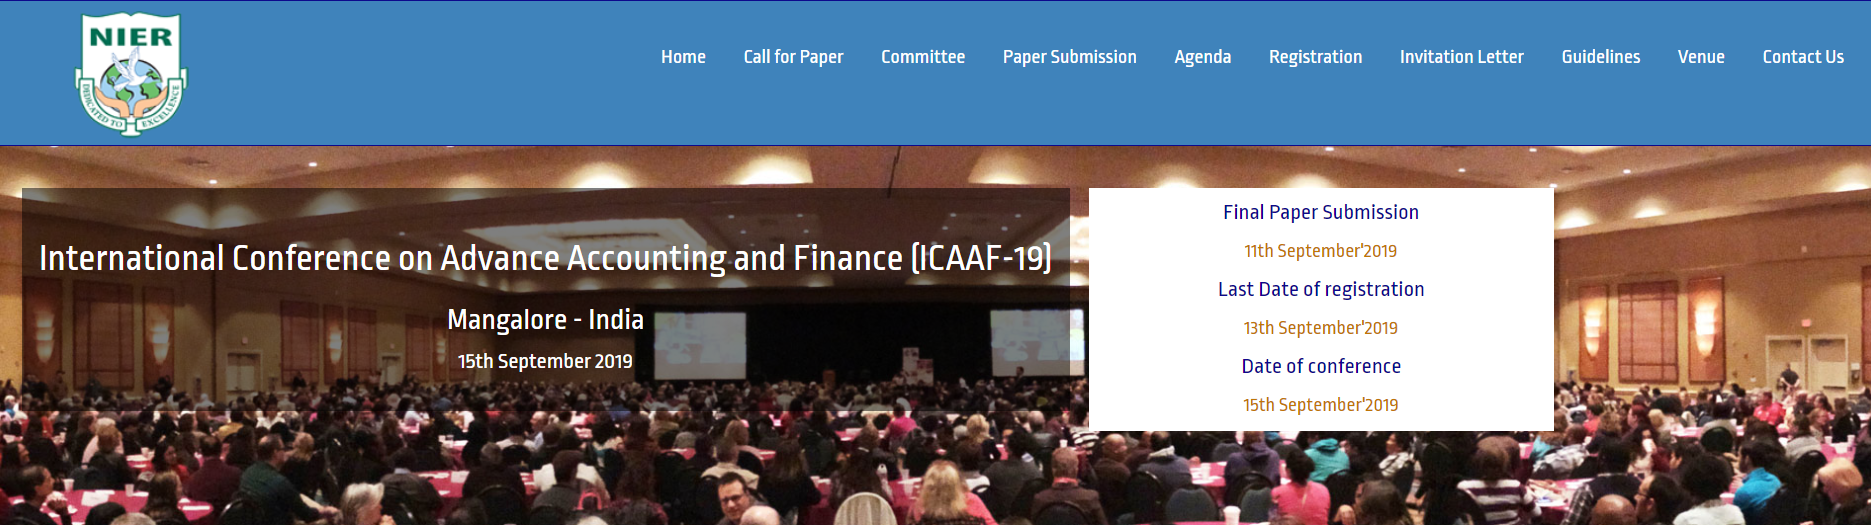 International Conference on Advance Accounting and Finance (ICAAF-19), Mangalore, Karnataka, India